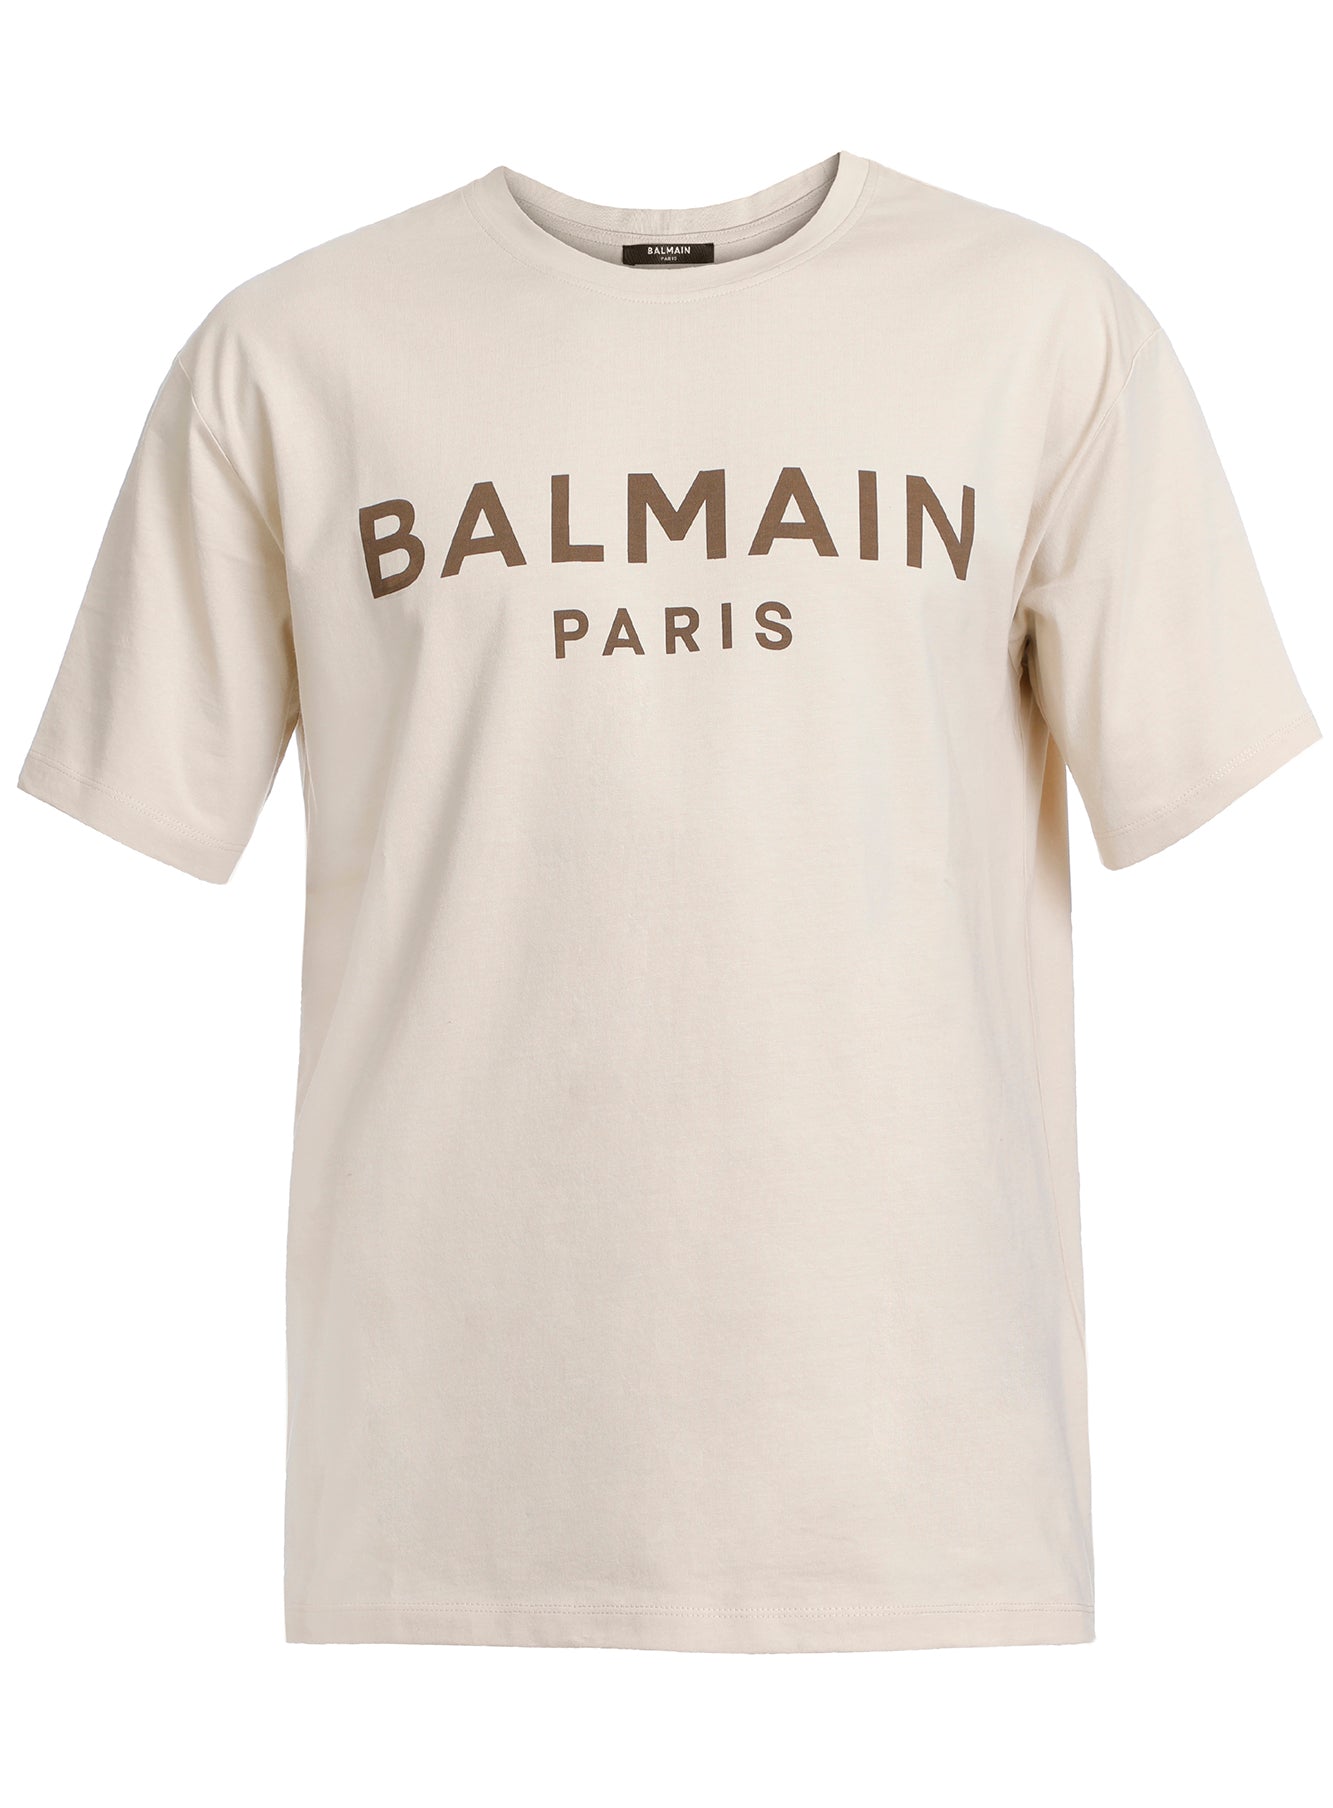 BALMAIN PRINTED T-SHIRT CREAM PureAtlanta.com